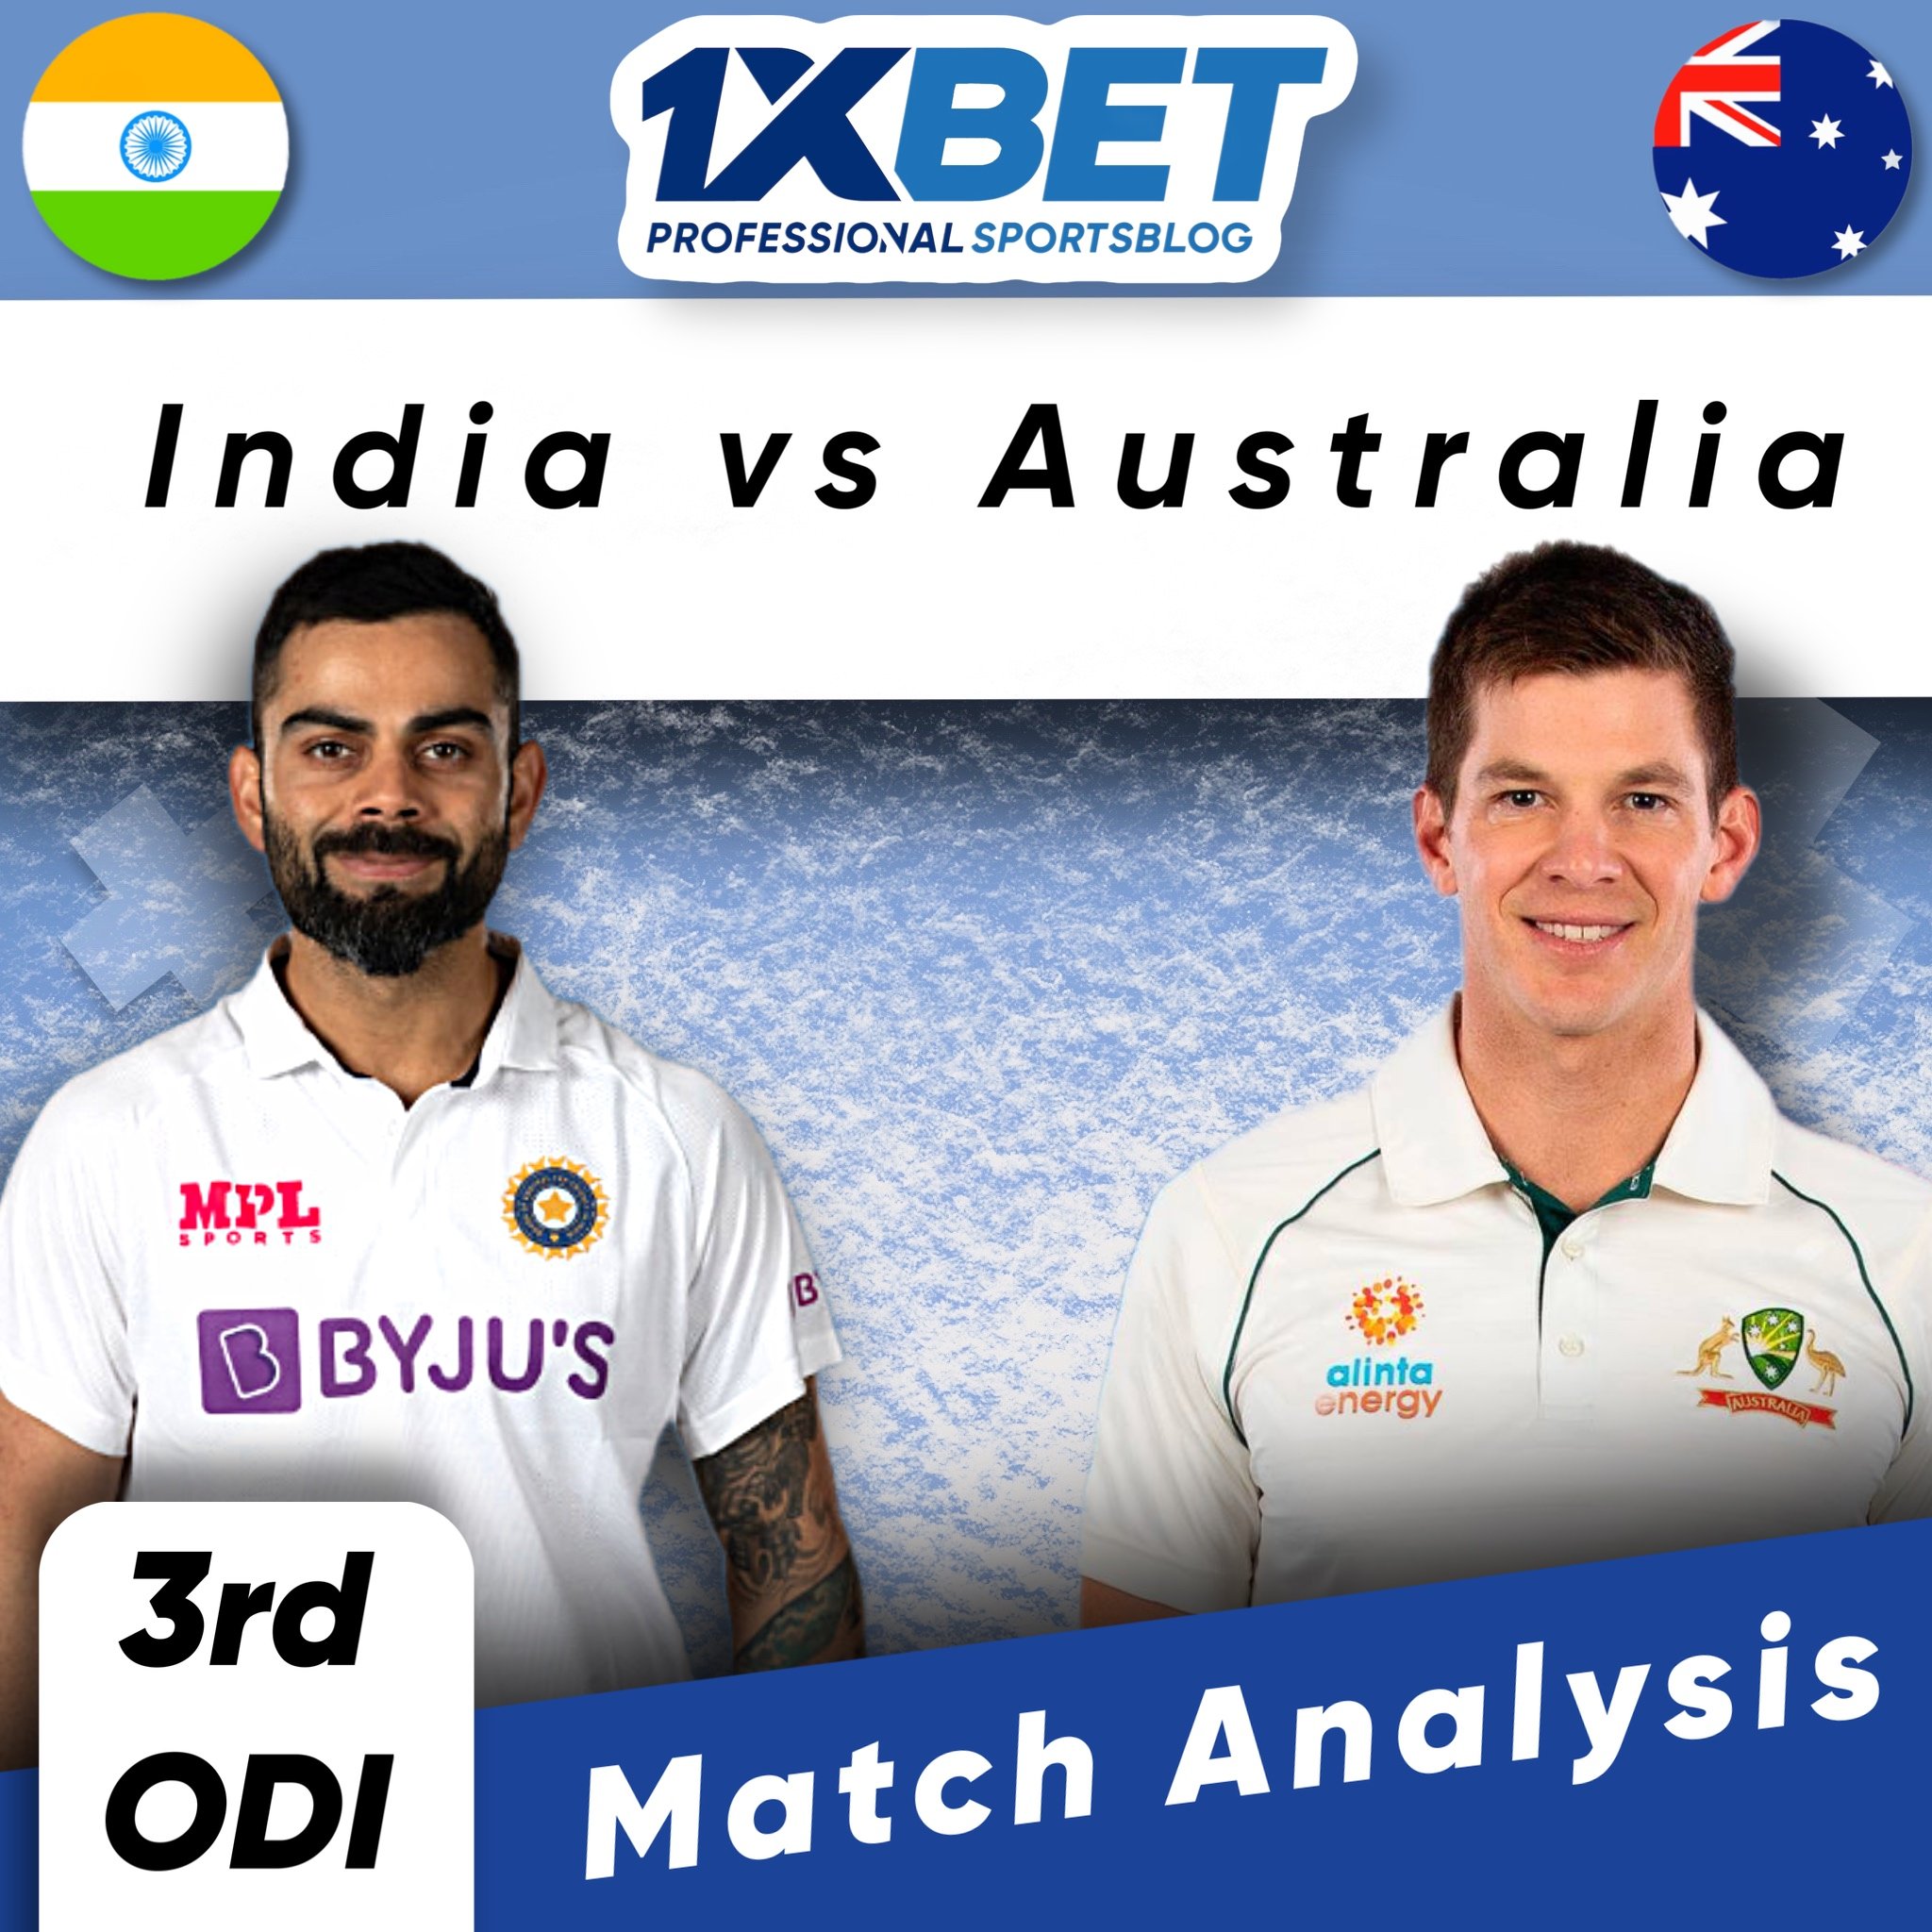 India vs Australia, 3rd ODI Match Analysis